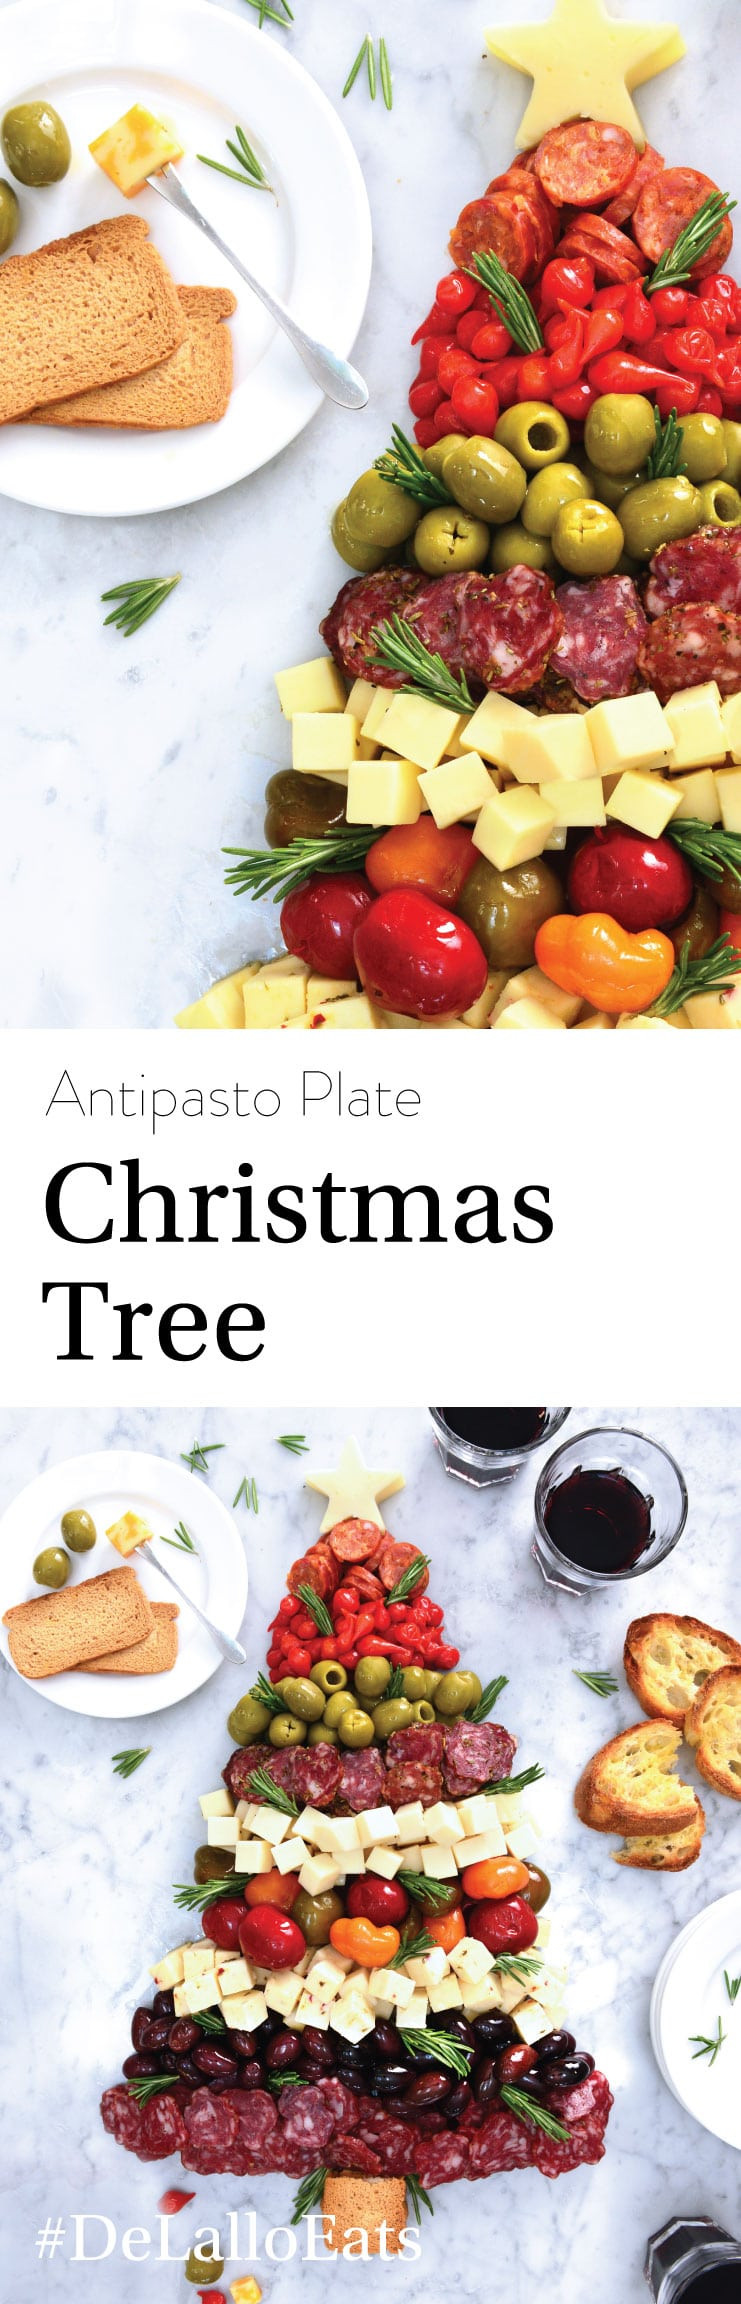 Antipasto Christmas Tree
 Christmas Tree Antipasto Plate DeLallo